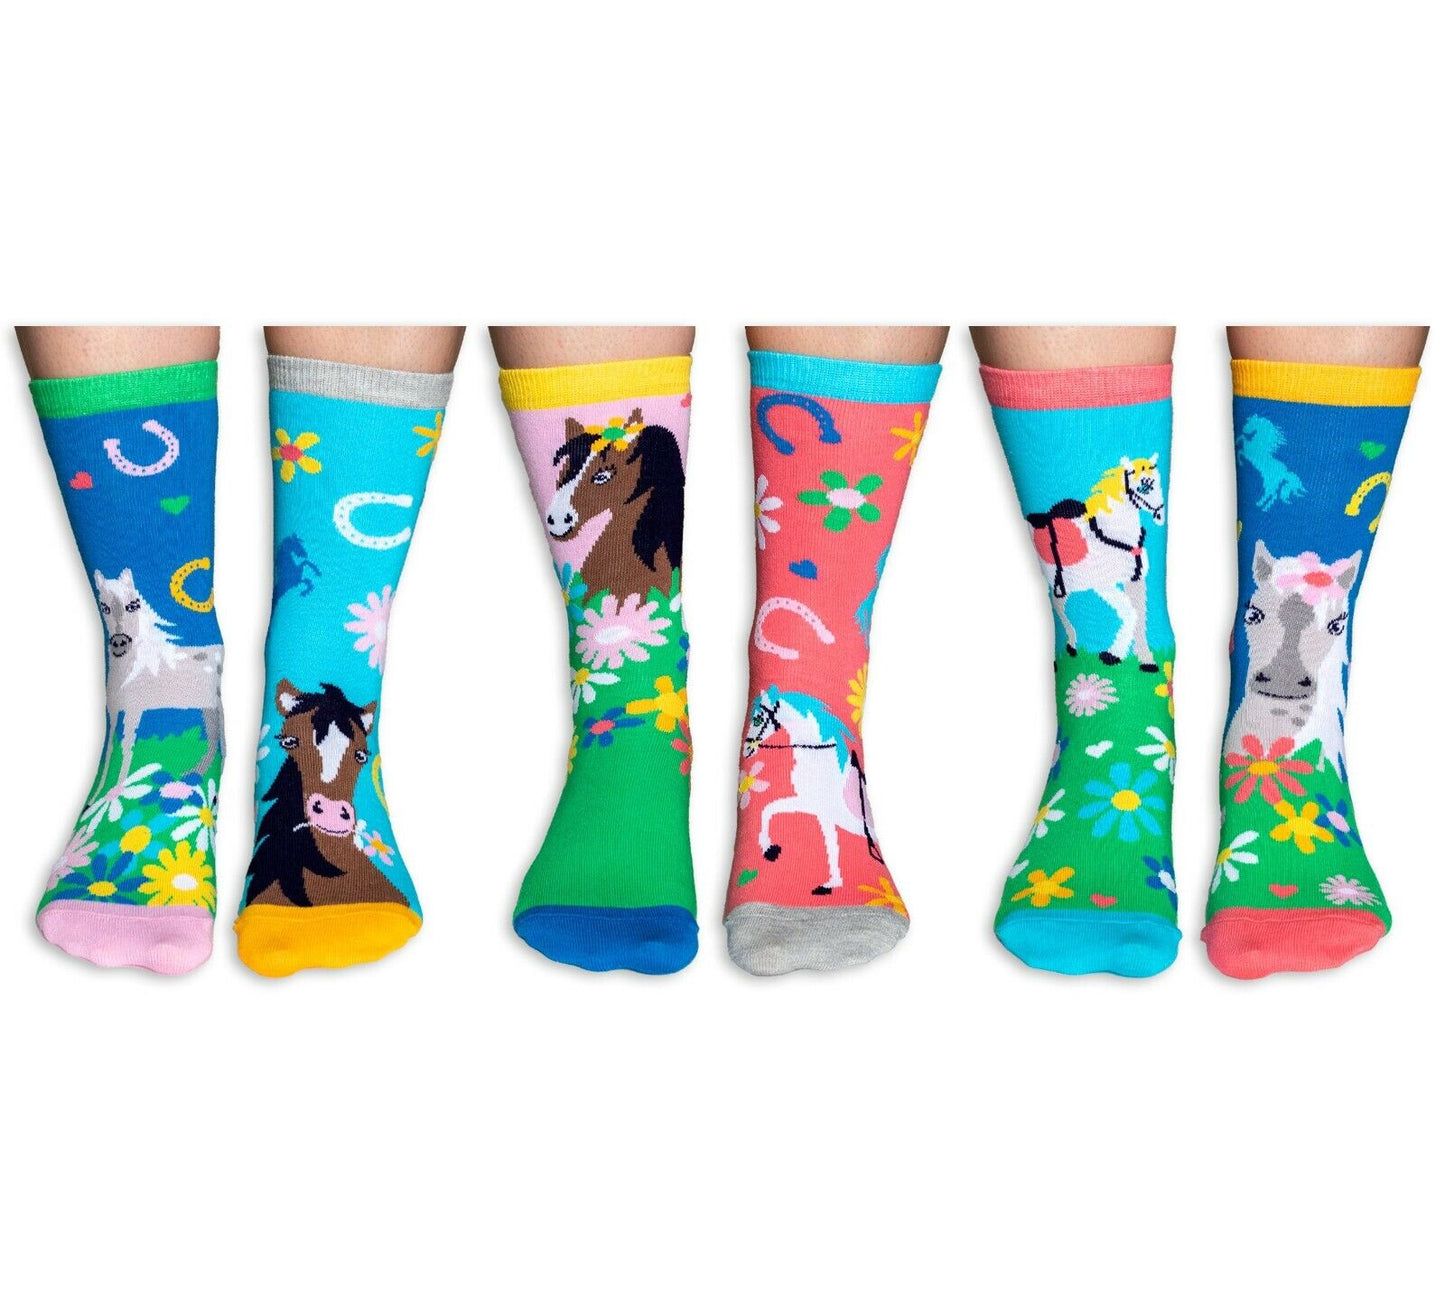 United Oddsocks Giddy Up Set Of 6 Girls Socks UK Size 12-5.5